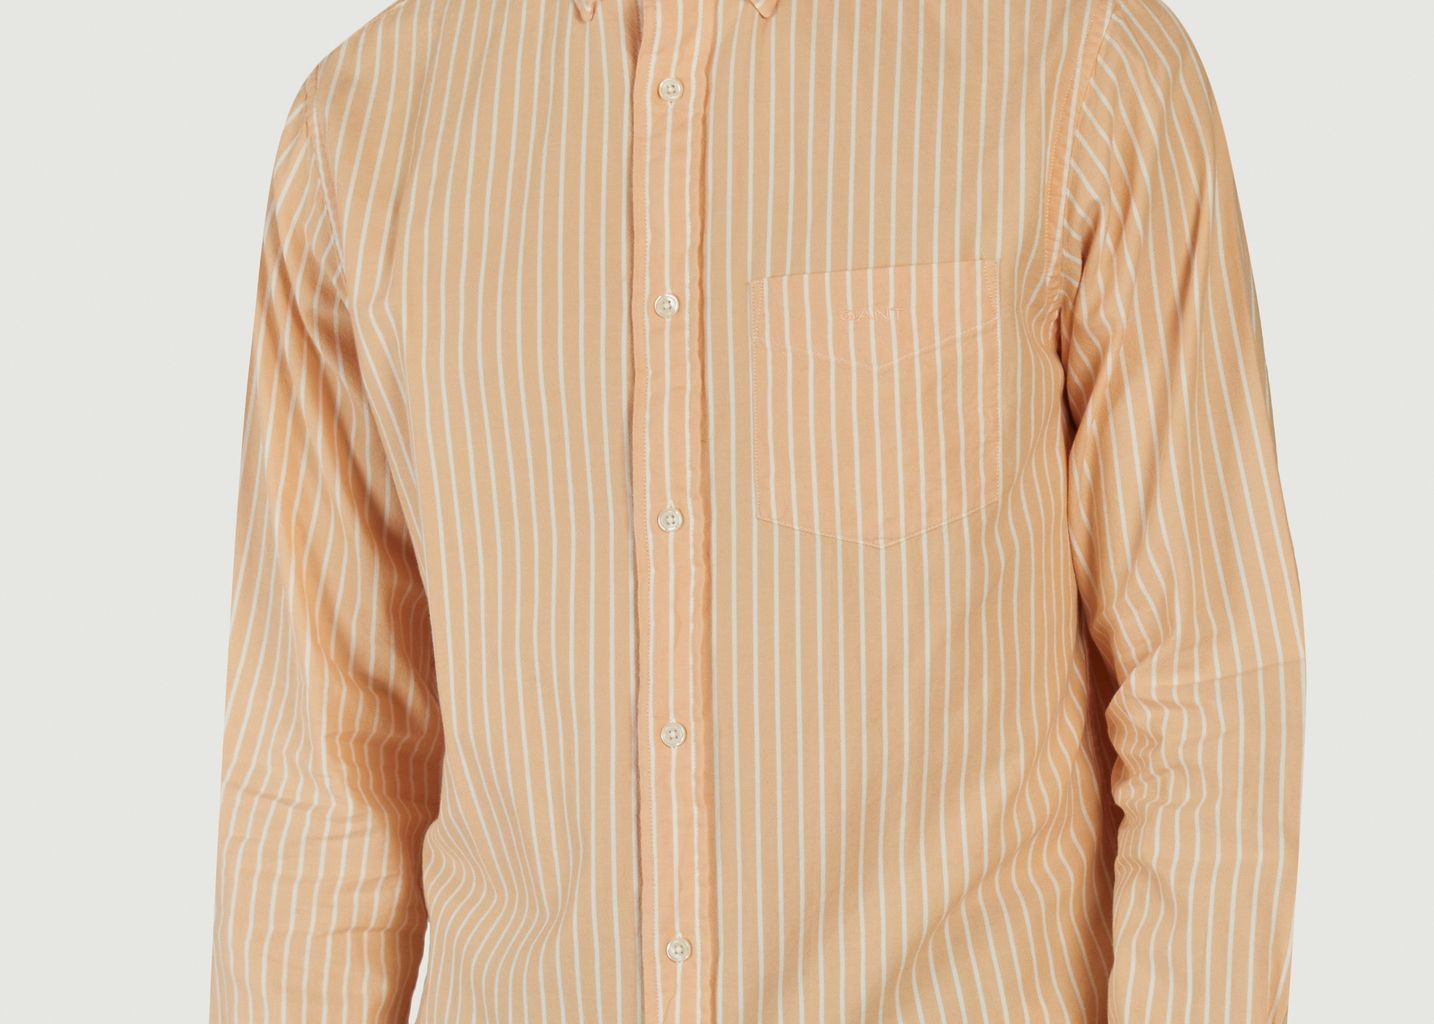 Archives Stripe Shirt - Gant